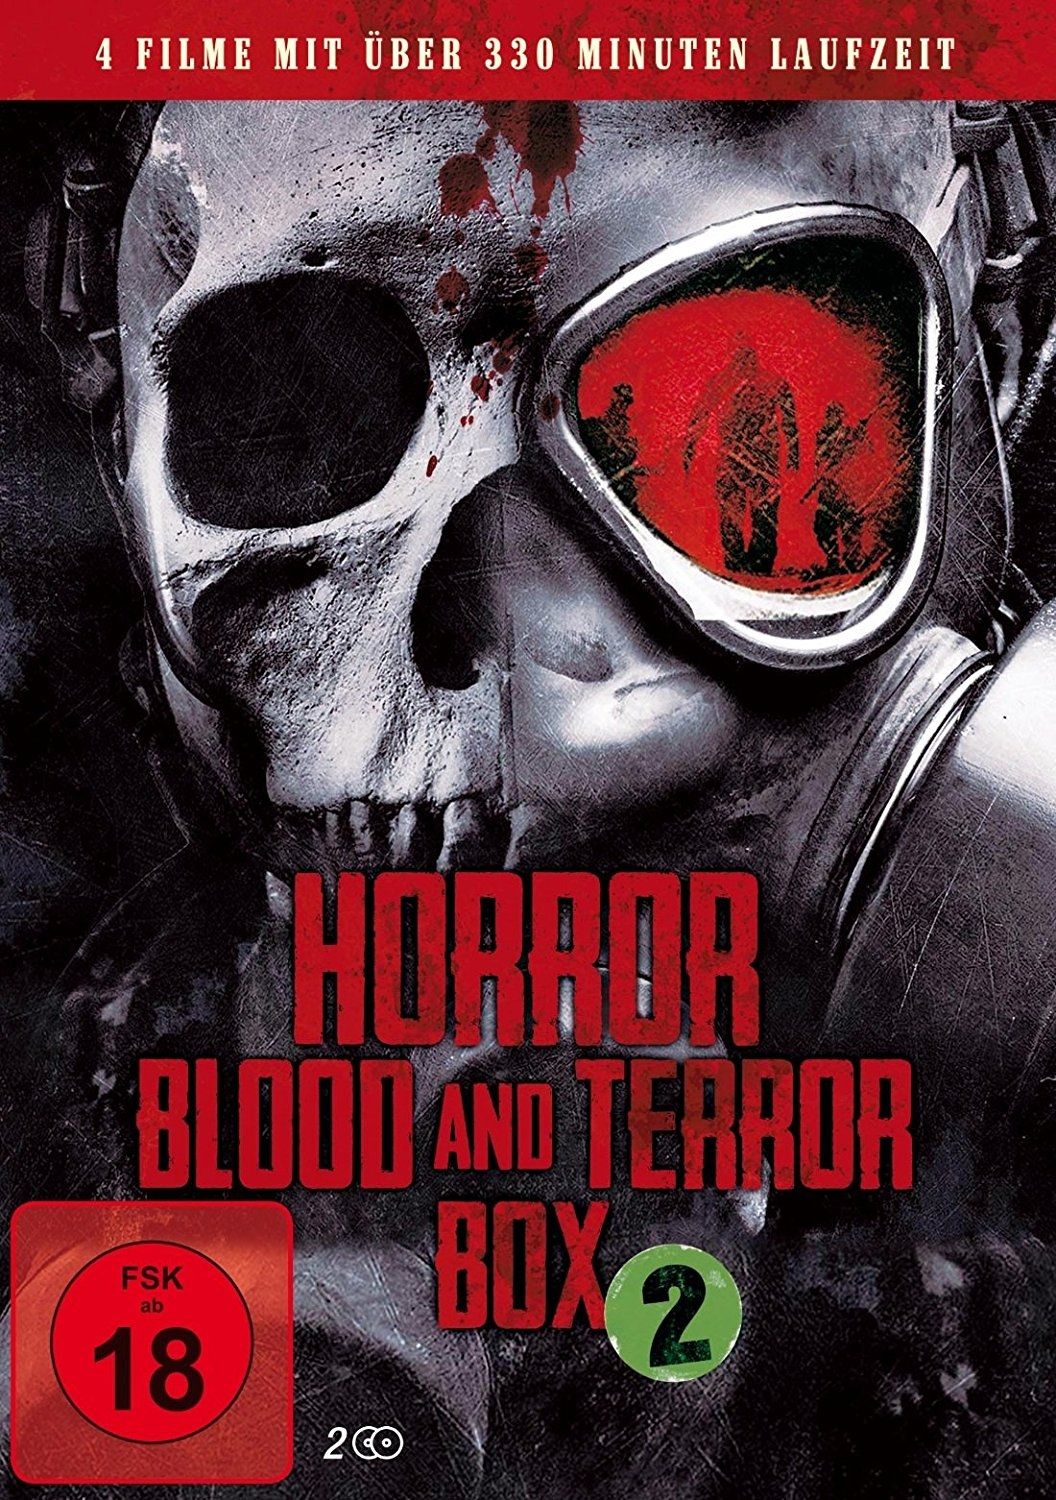 Eaters / Die Nacht bringt den Tod / Creep Van / Bloody Homecoming (Horror Blood & Terror Box 2) (2 Discs)